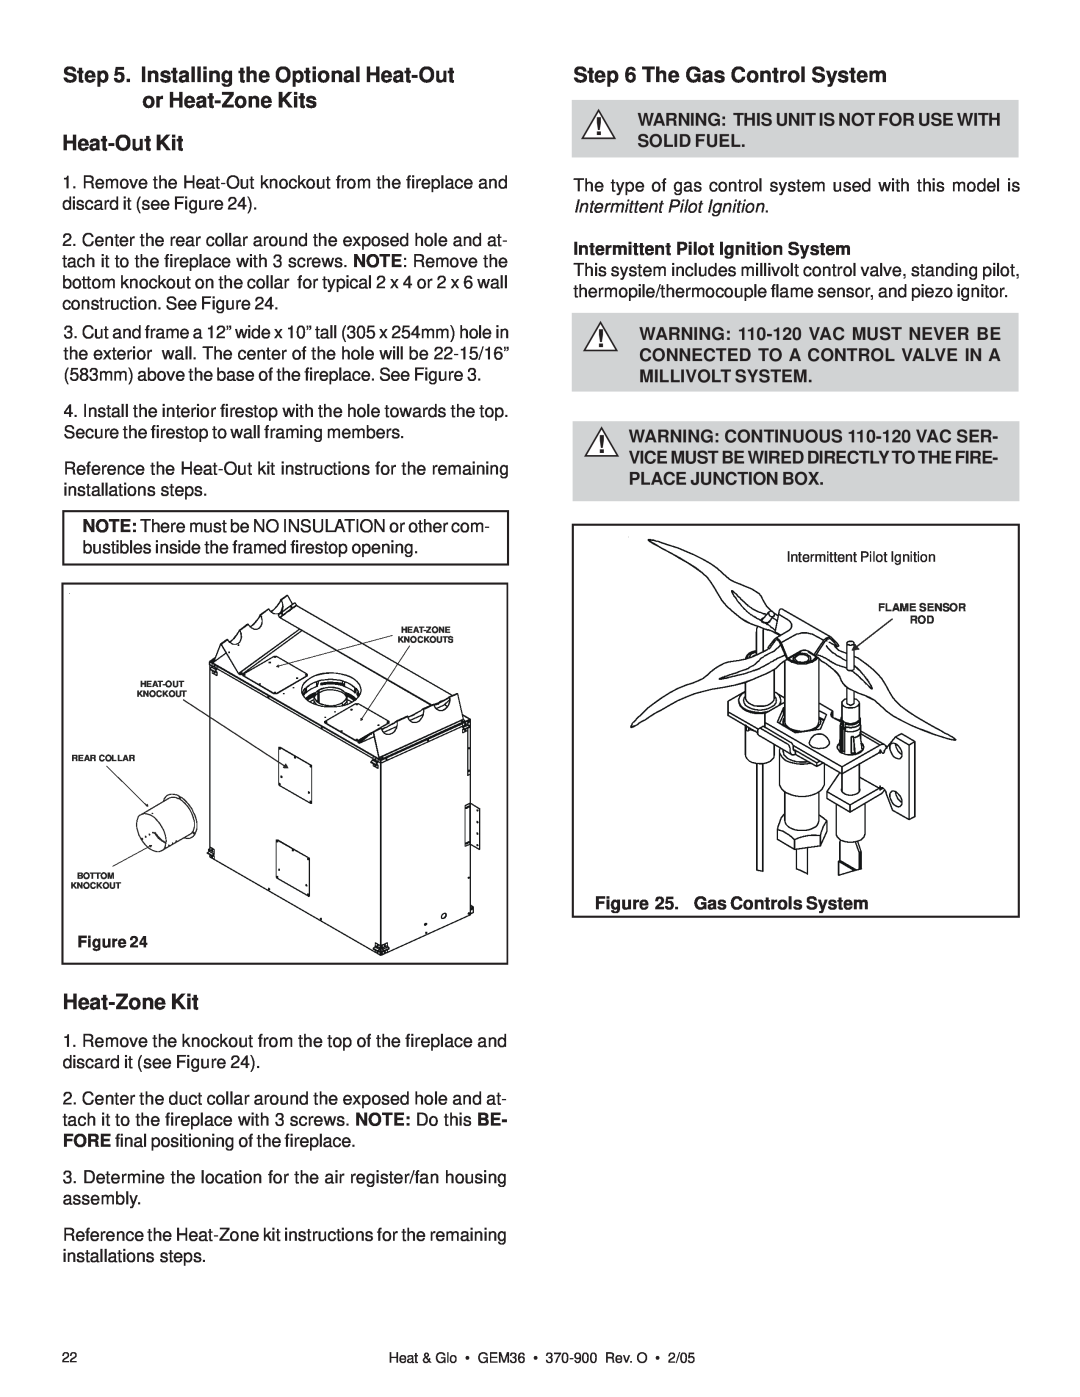 Heat & Glo LifeStyle GEM36 manual Heat-OutKit, Heat-ZoneKit, The Gas Control System, Intermittent Pilot Ignition System 